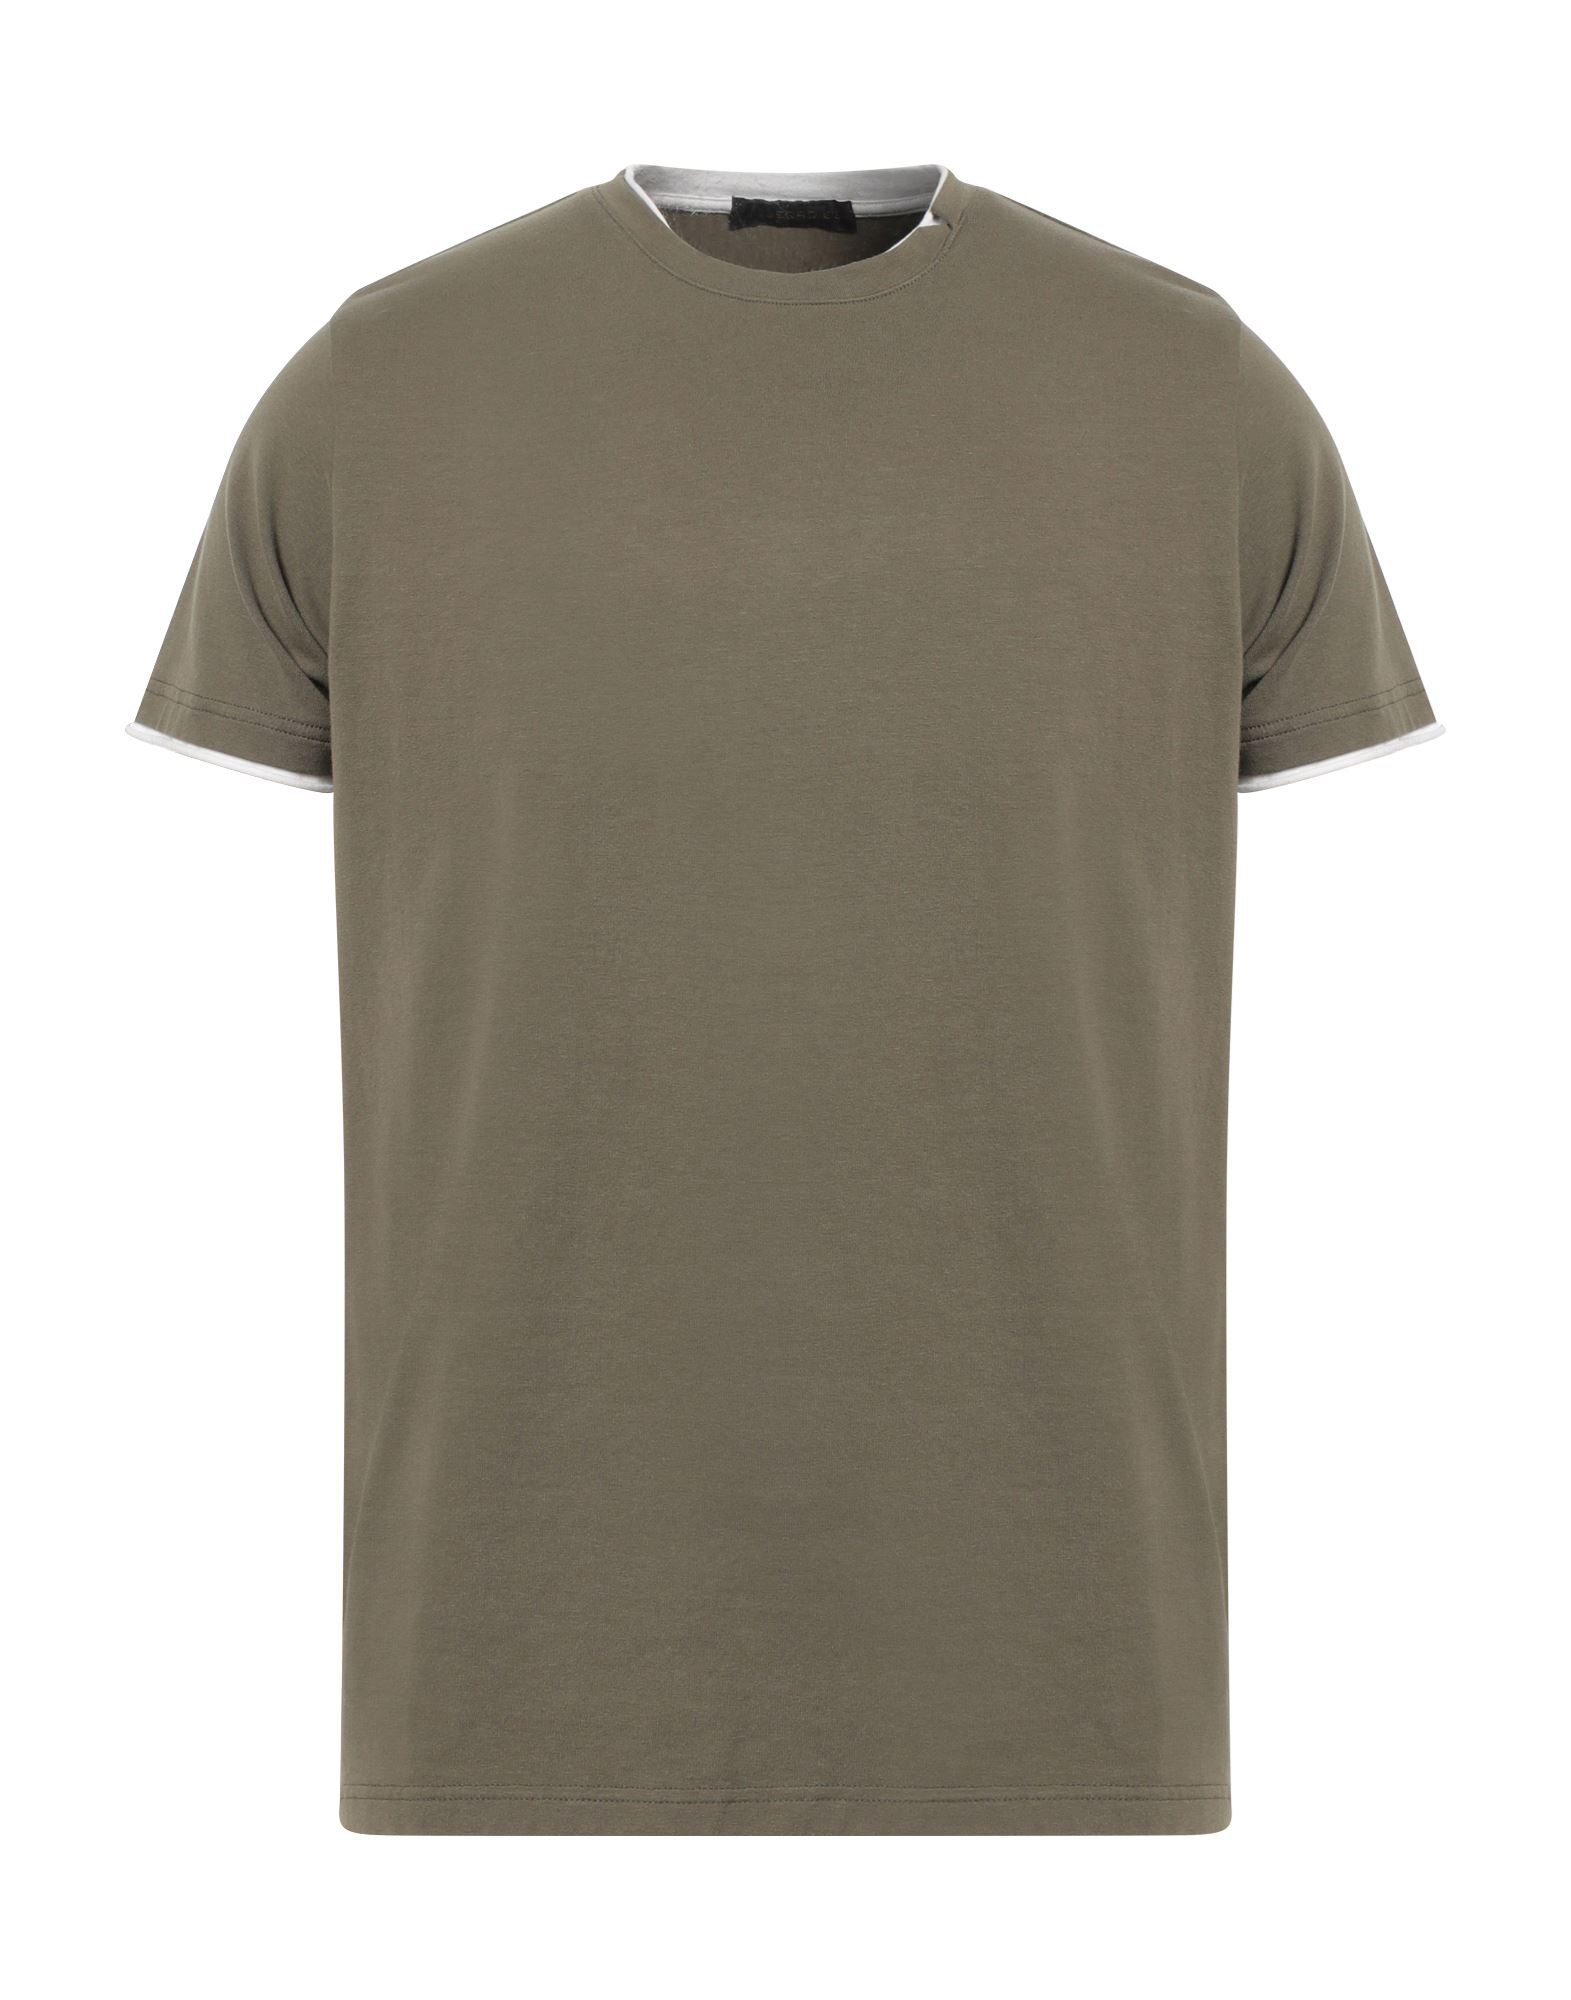 Jeordie's Man T-shirt Military Green Size M Cotton, Elastane